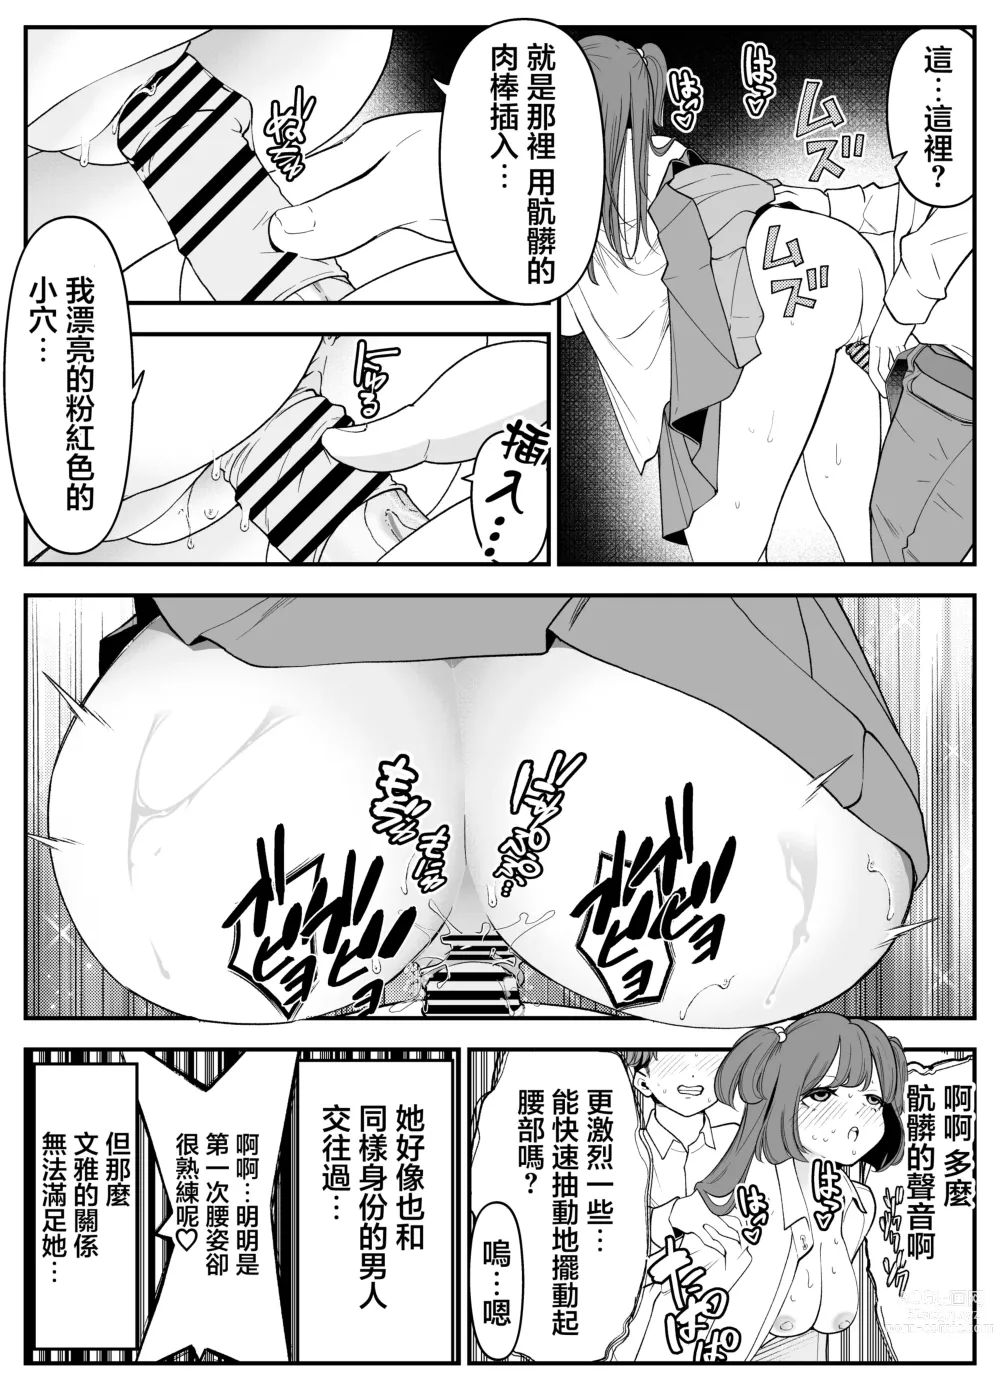 Page 17 of doujinshi 反正結婚之後大家都會SEX要不要和同學一起練習一下?